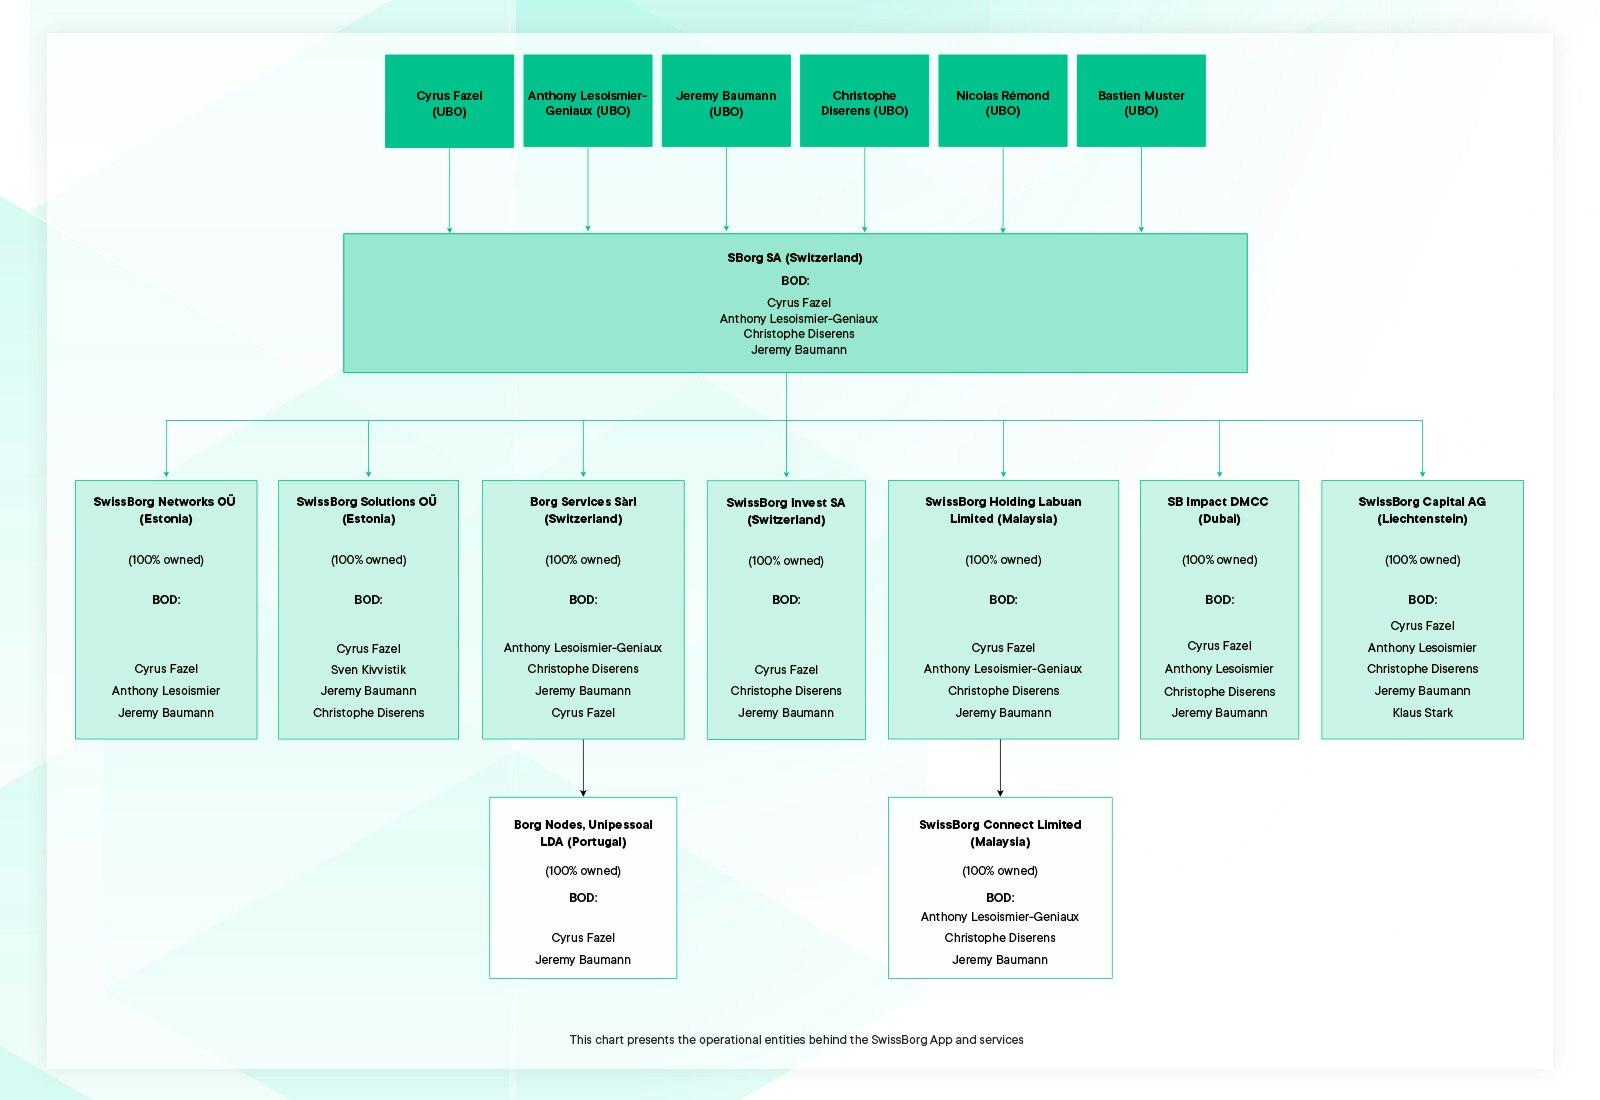 wissBorg’s Operational Entities Organisational Chart